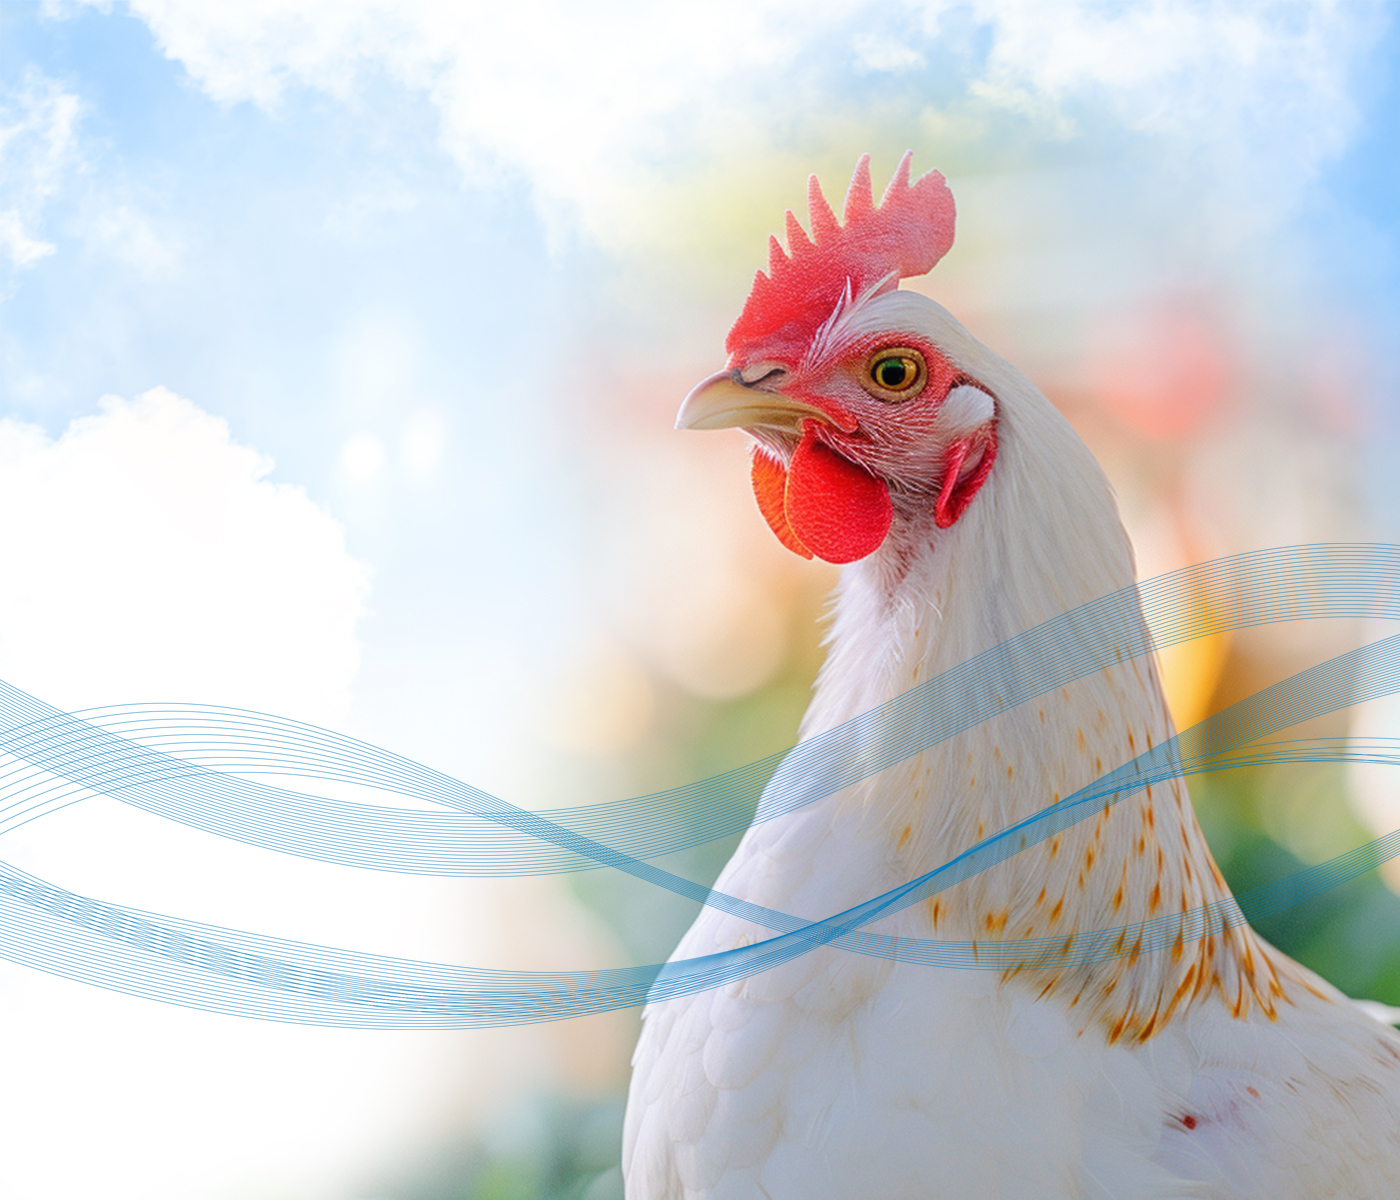 Reducción del estrés térmico en avicultura